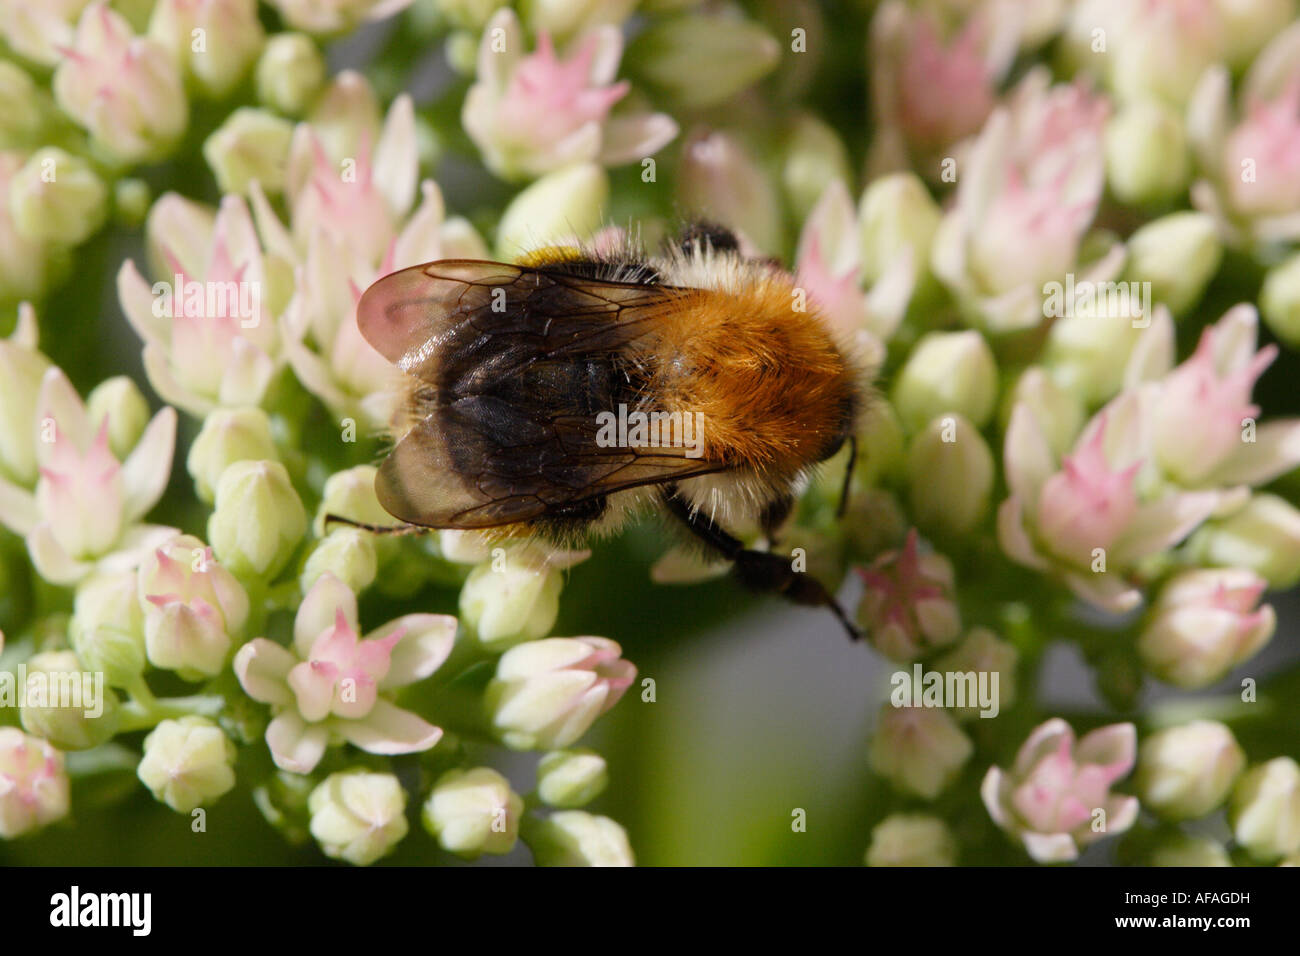 Bumble bee or common carder bee (Bombus agrorum) on stonecrop Stock Photo